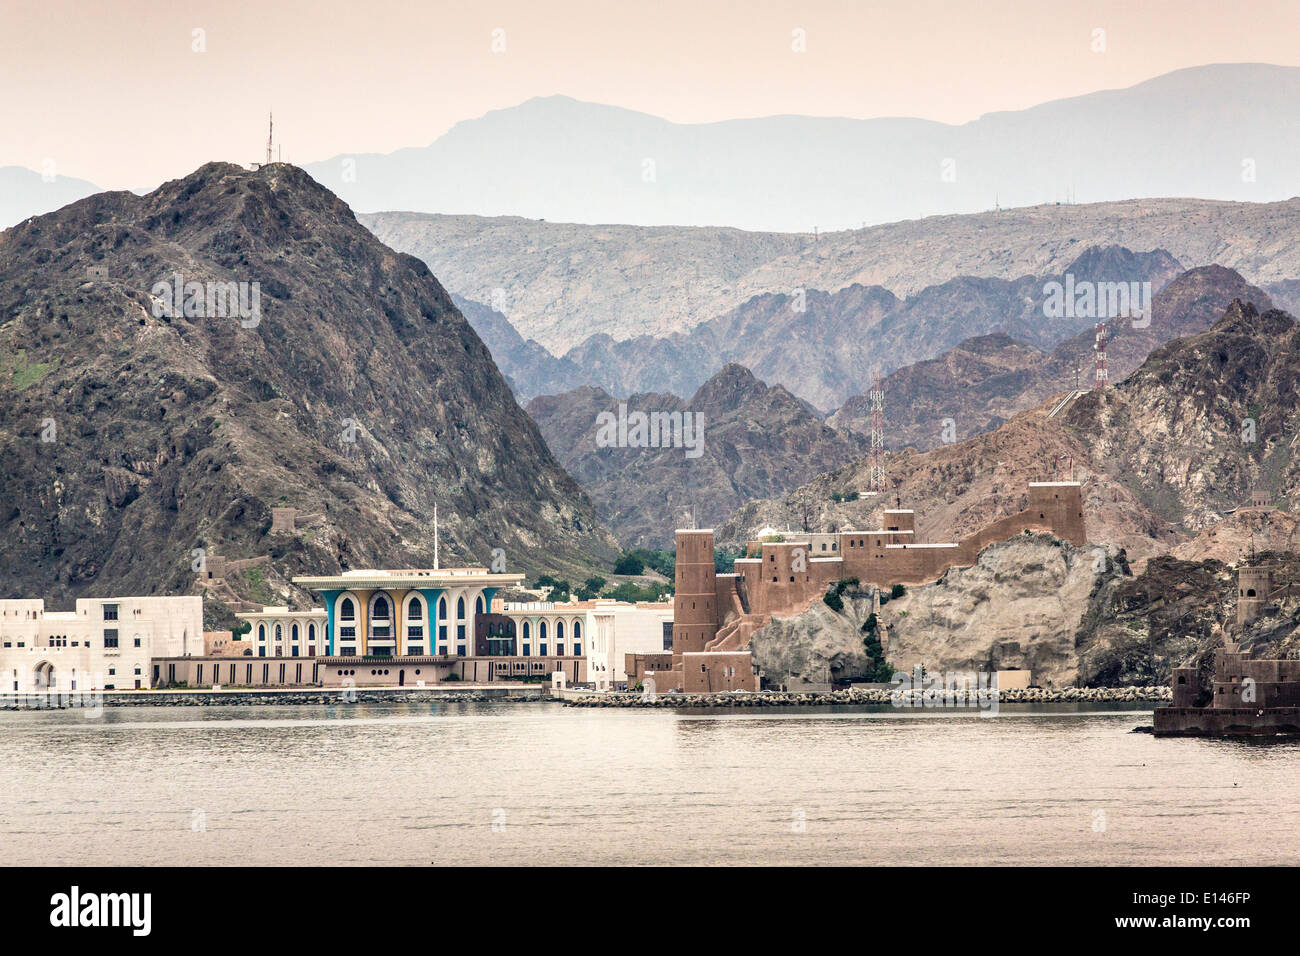 Oman, Muscat, Palace of Sultan Qaboos Stock Photo